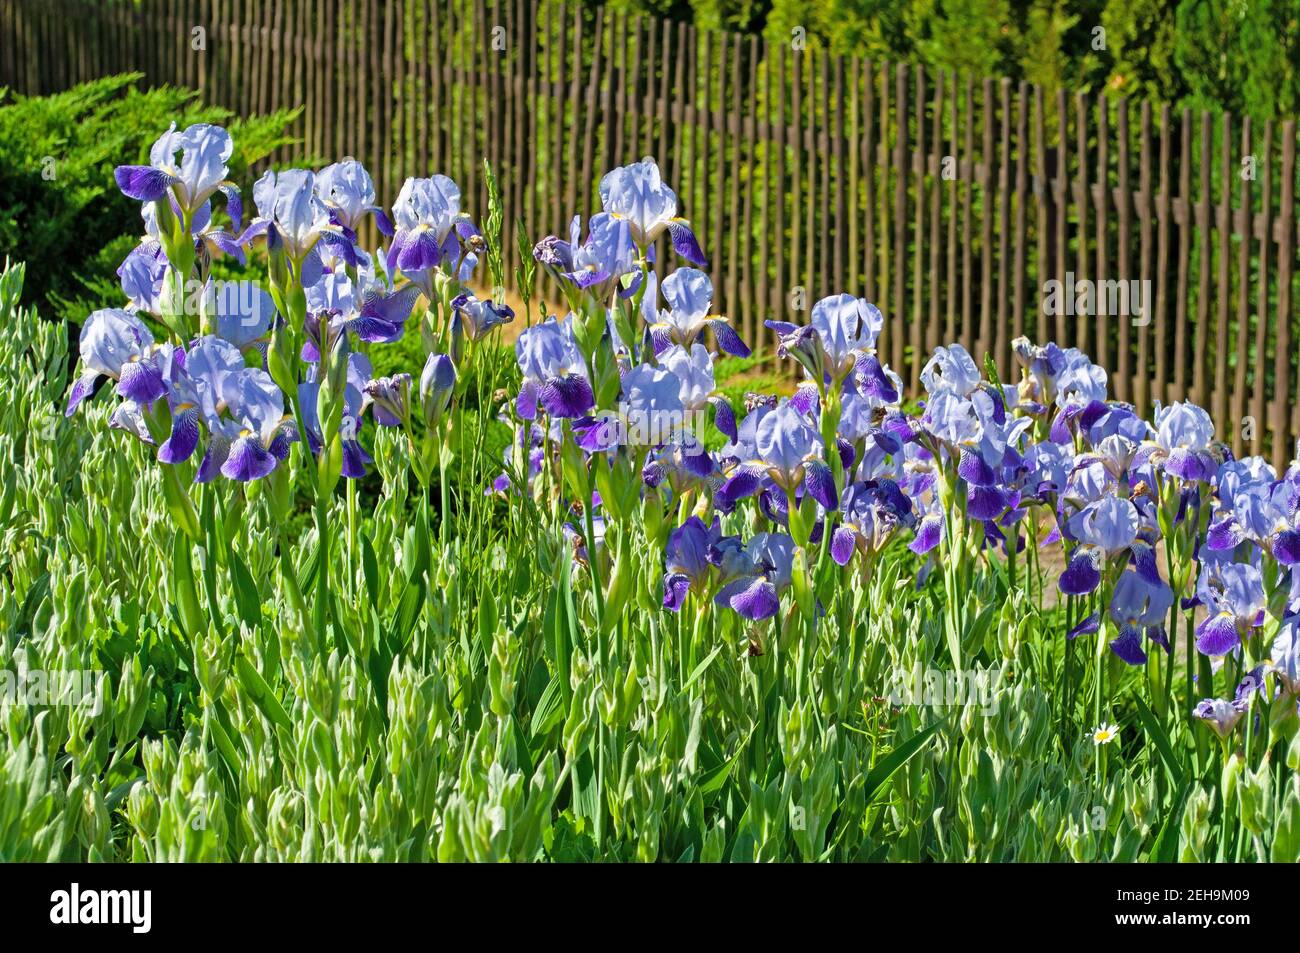 Blooming irises, iris, in the garden Stock Photo